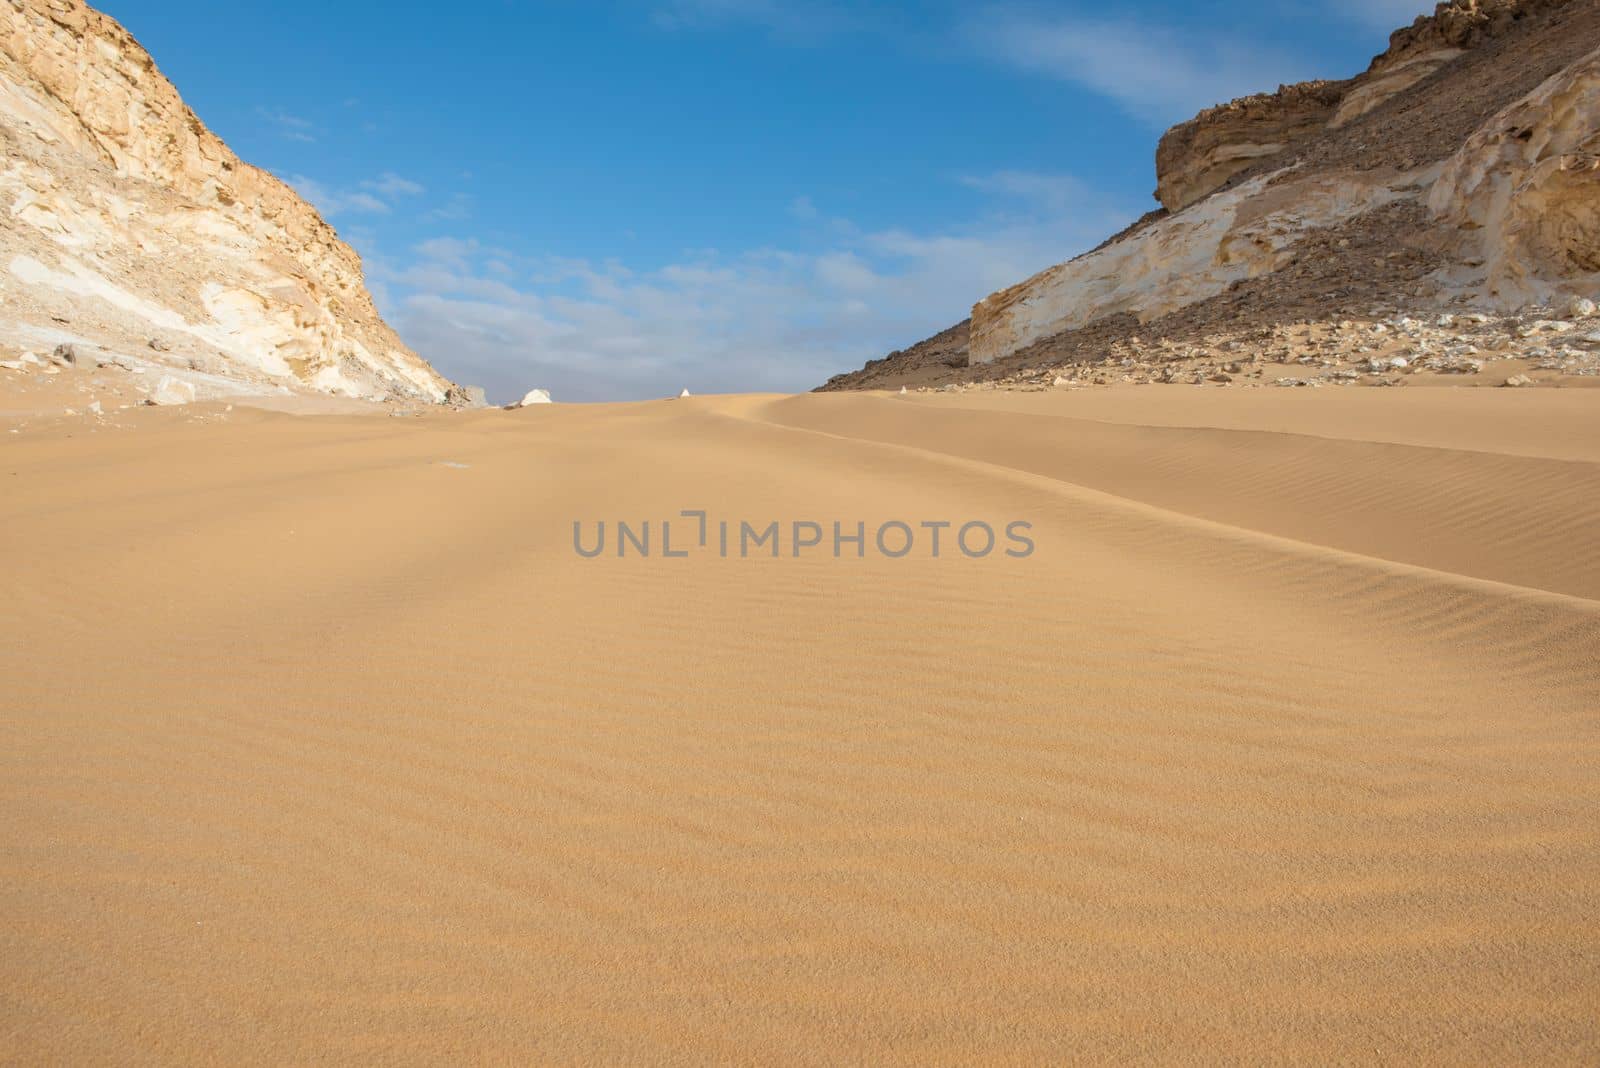 Barren desert landscape in hot climate with sand dunes by paulvinten